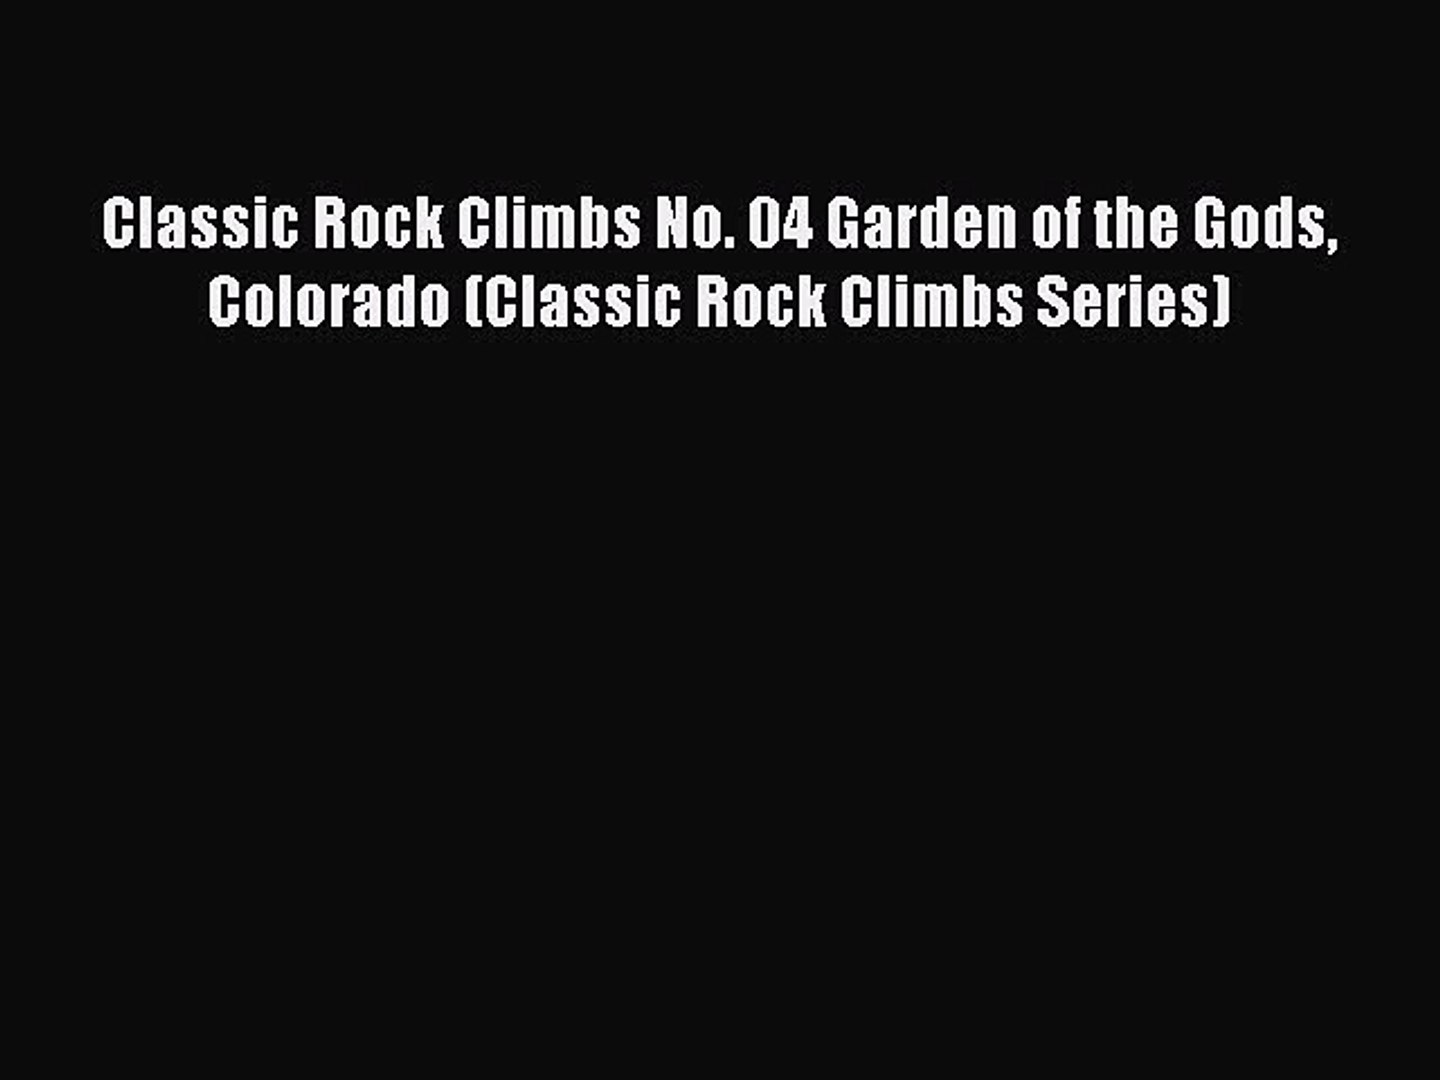 Download Classic Rock Climbs No. 04 Garden of the Gods Colorado (Classic Rock Climbs Series)